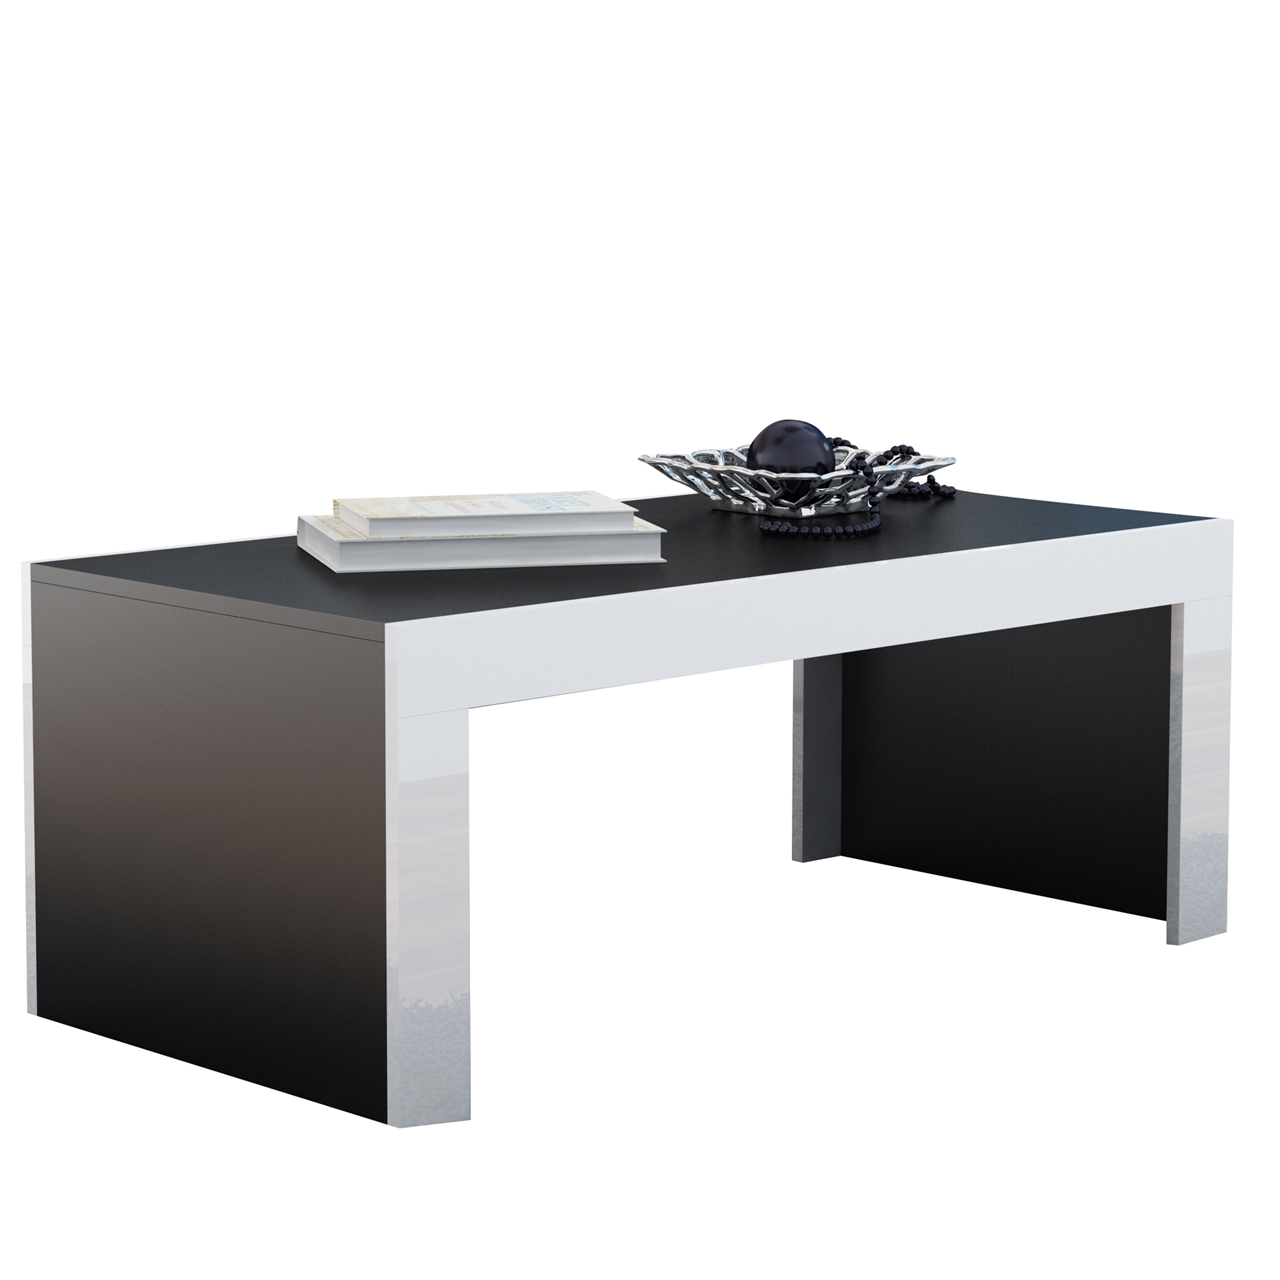 Coffee table TESS 120 black / white gloss